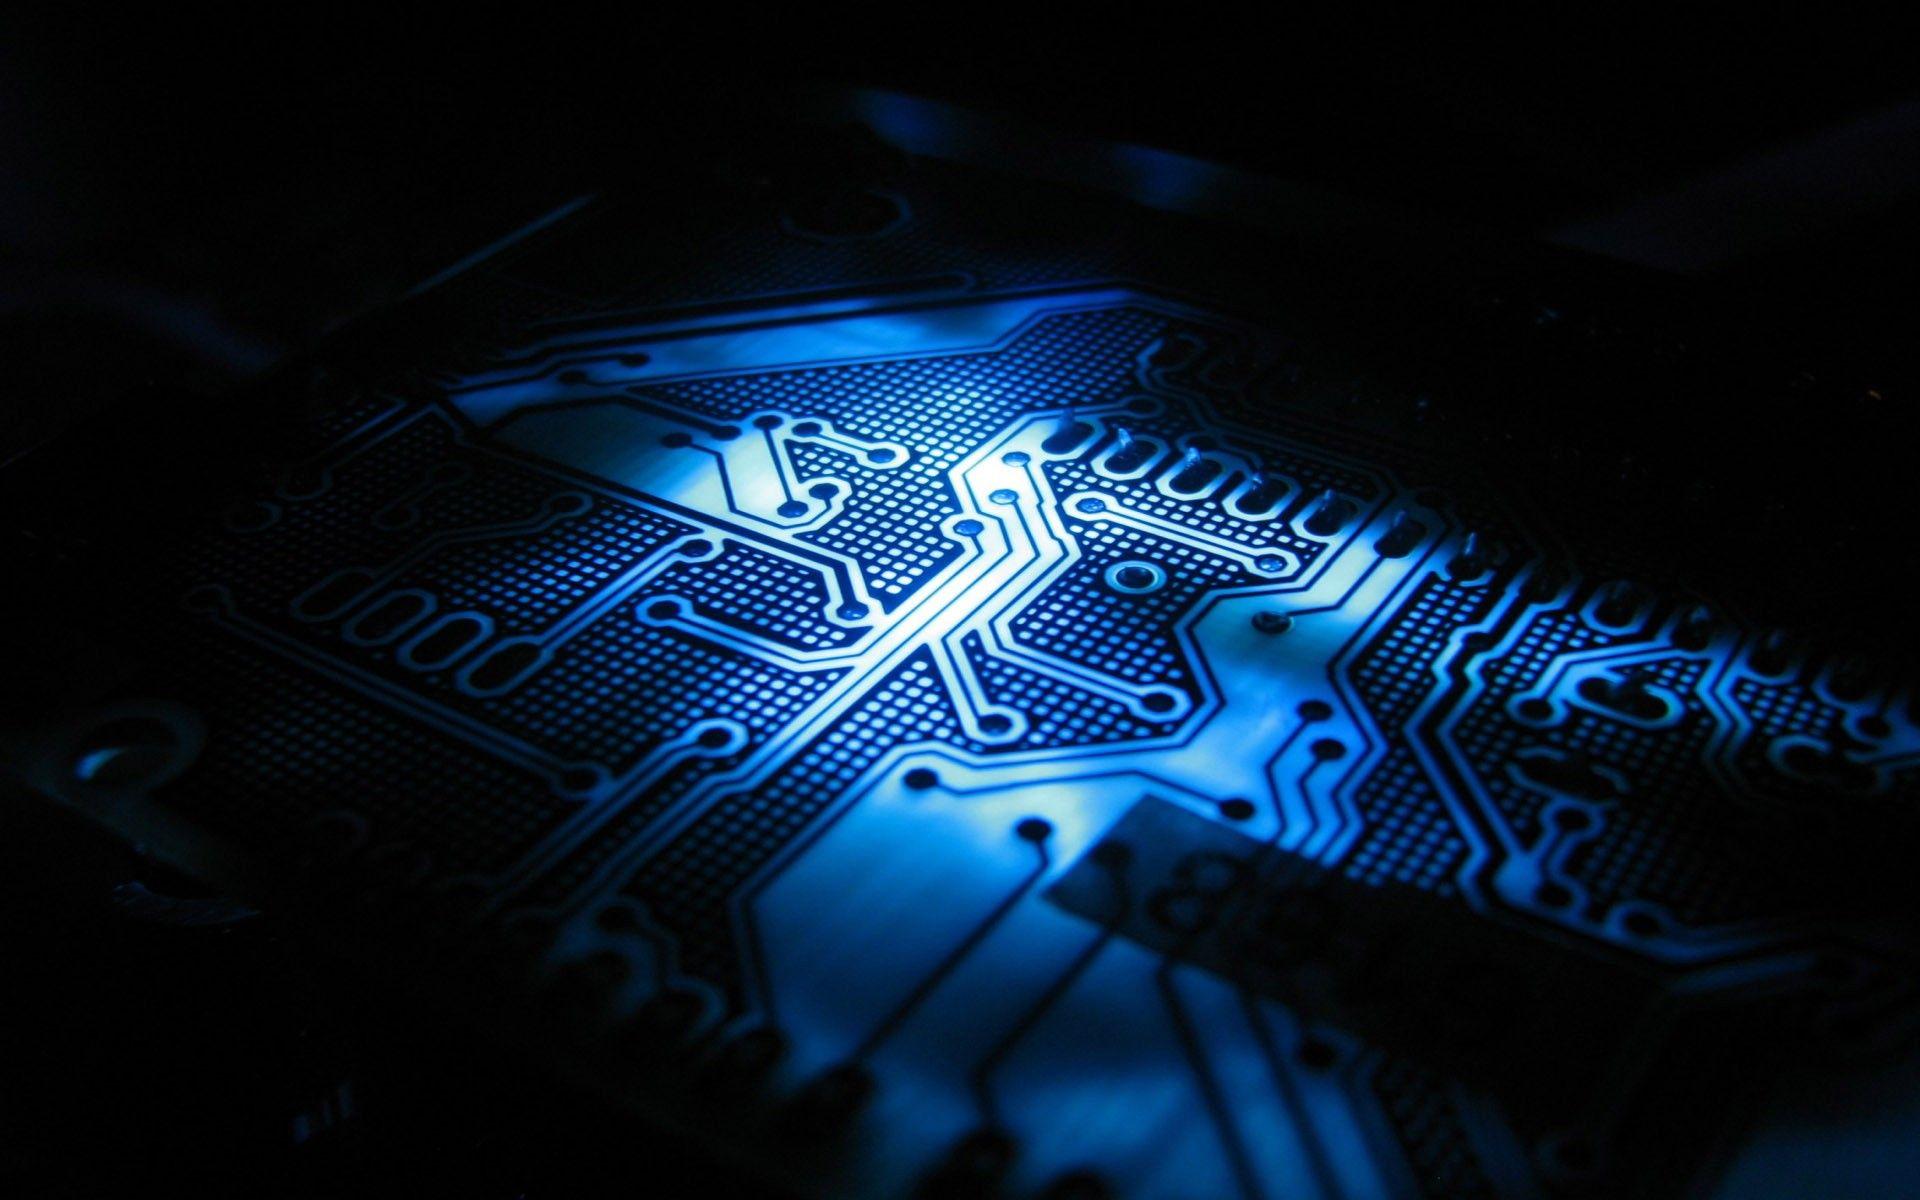 Blue Electronic Circuit Board Wallpaper free desktop background